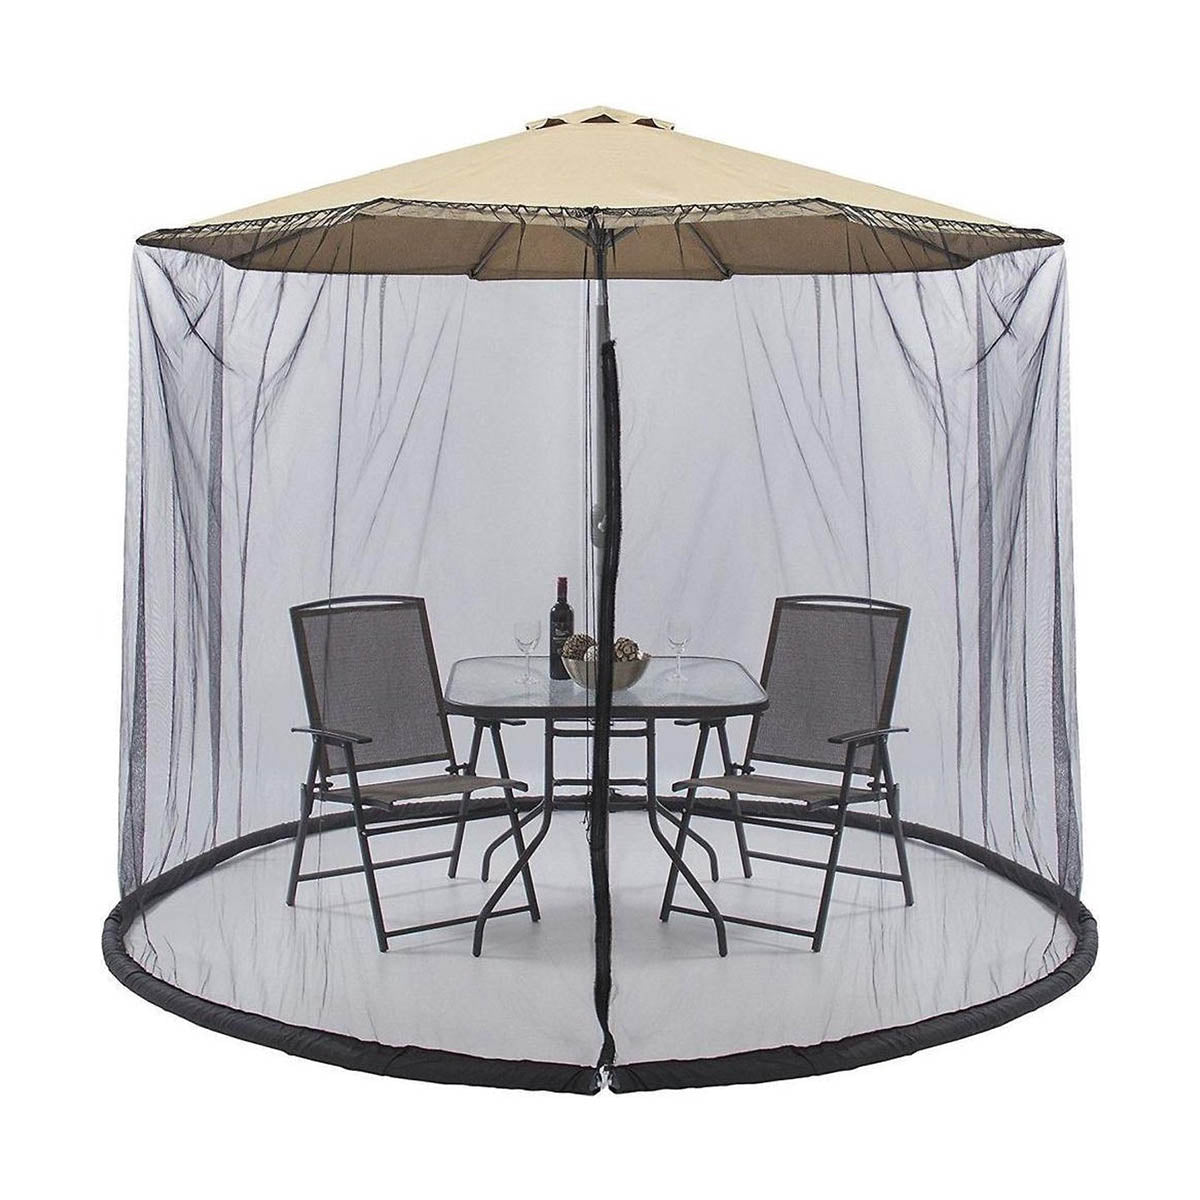 <tc>Ariko</tc> Fly curtain for Parasol - mosquito net - mosquito net - mosquito net - with weighted edge